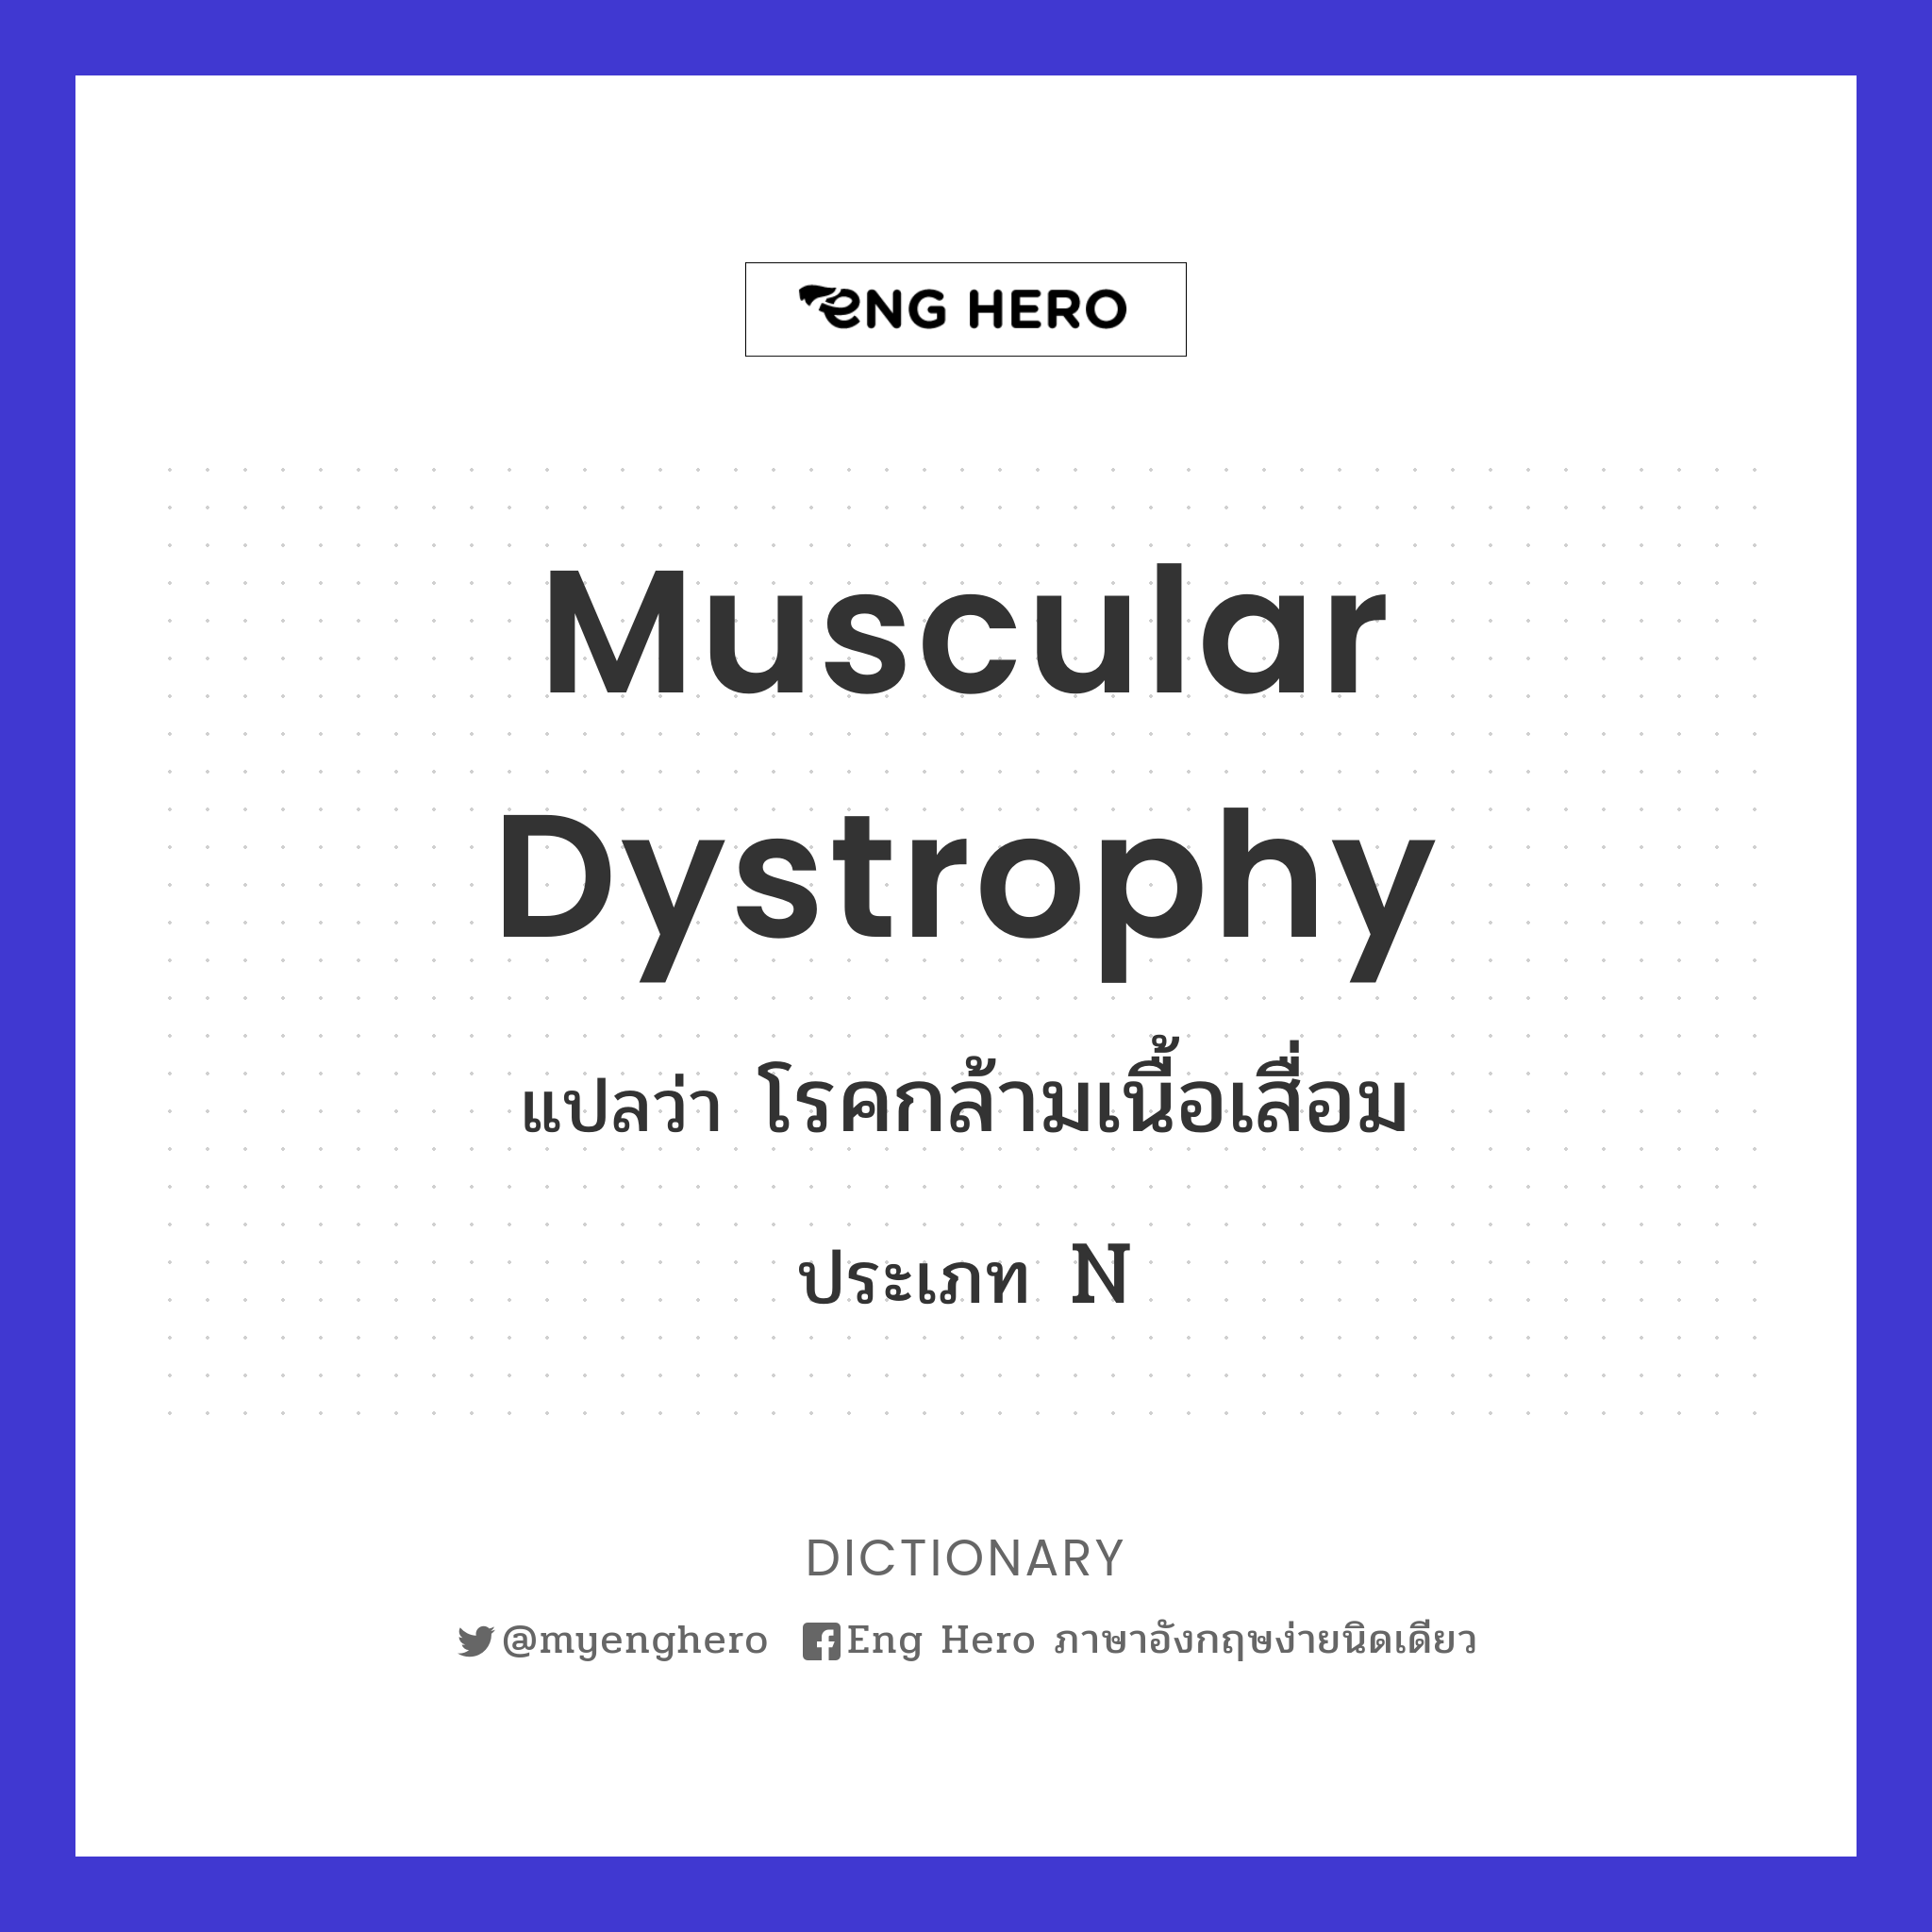 muscular dystrophy